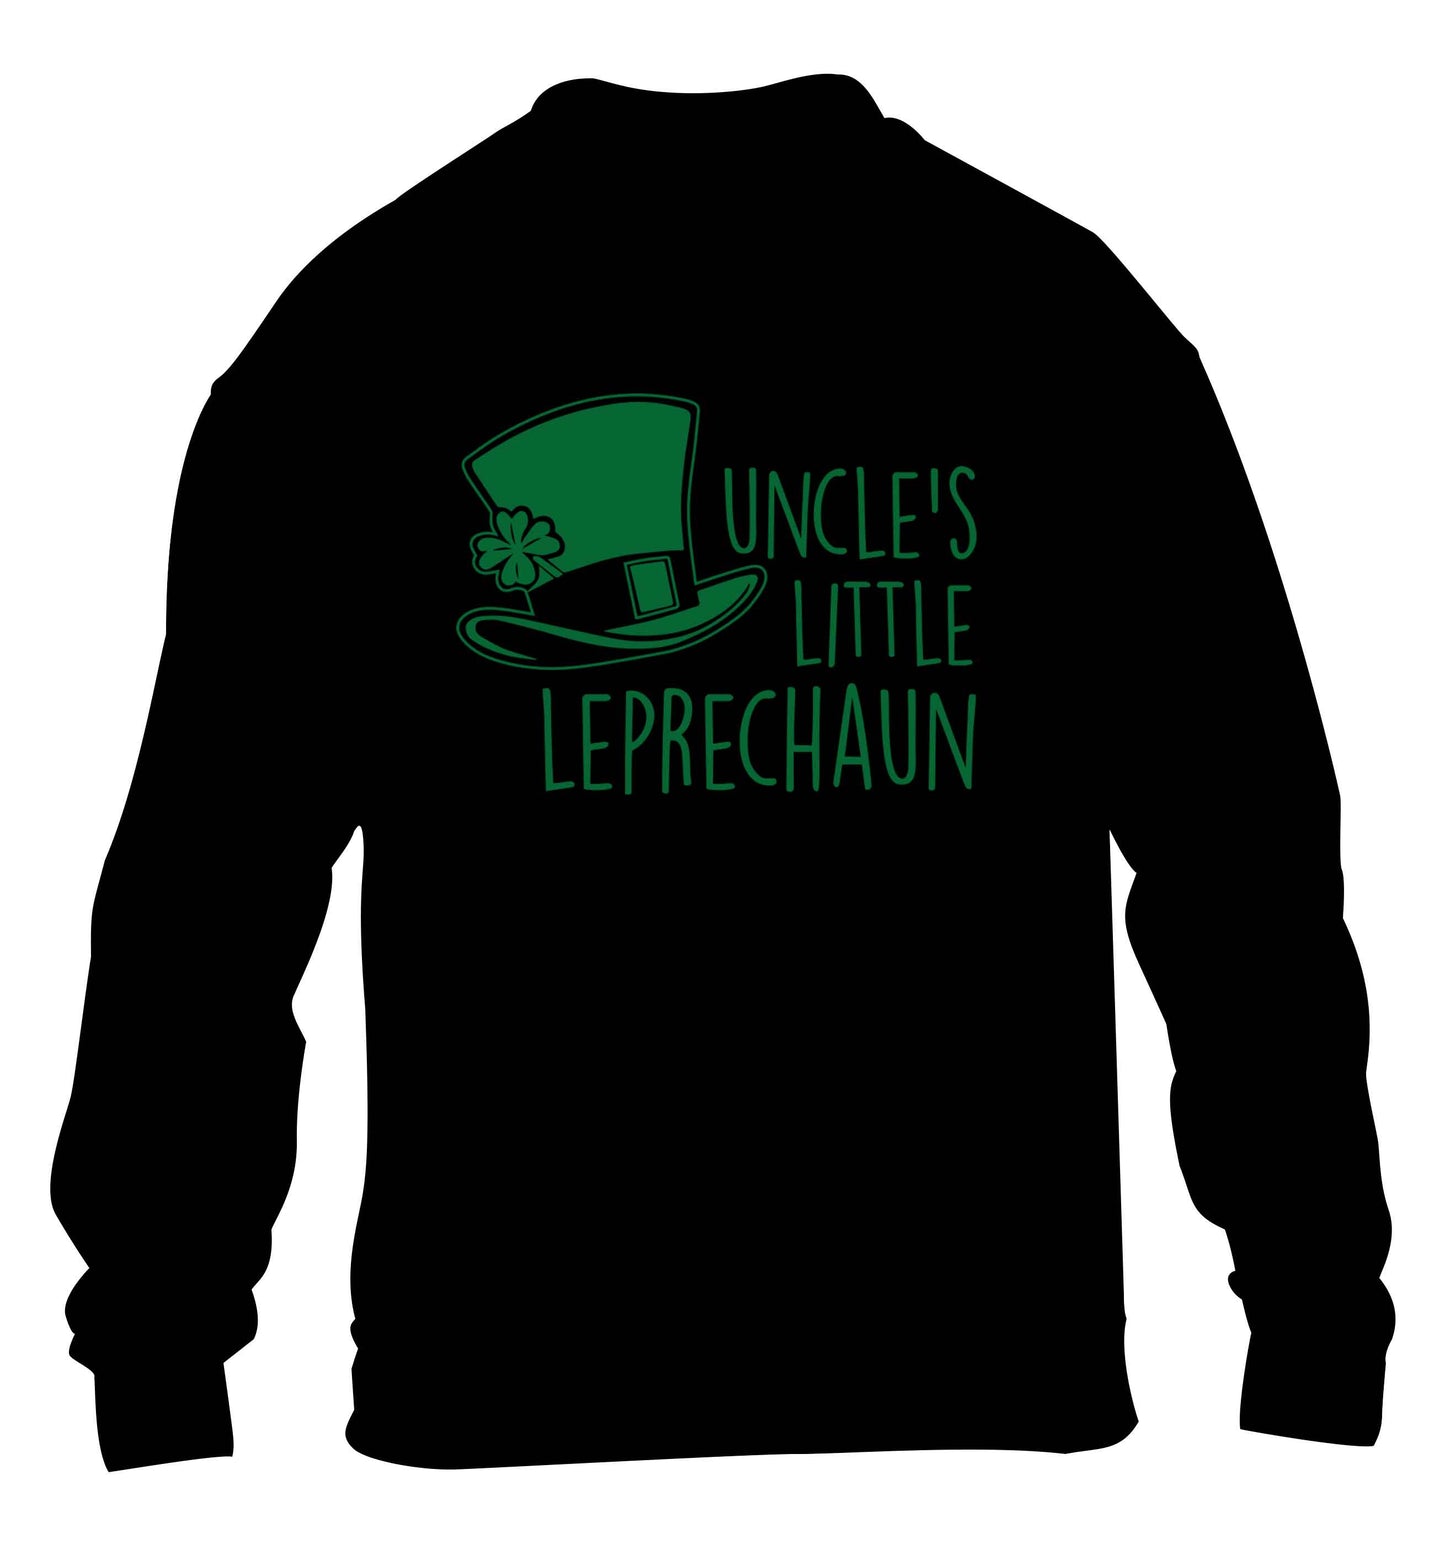 Uncles little leprechaun children's black sweater 12-13 Years